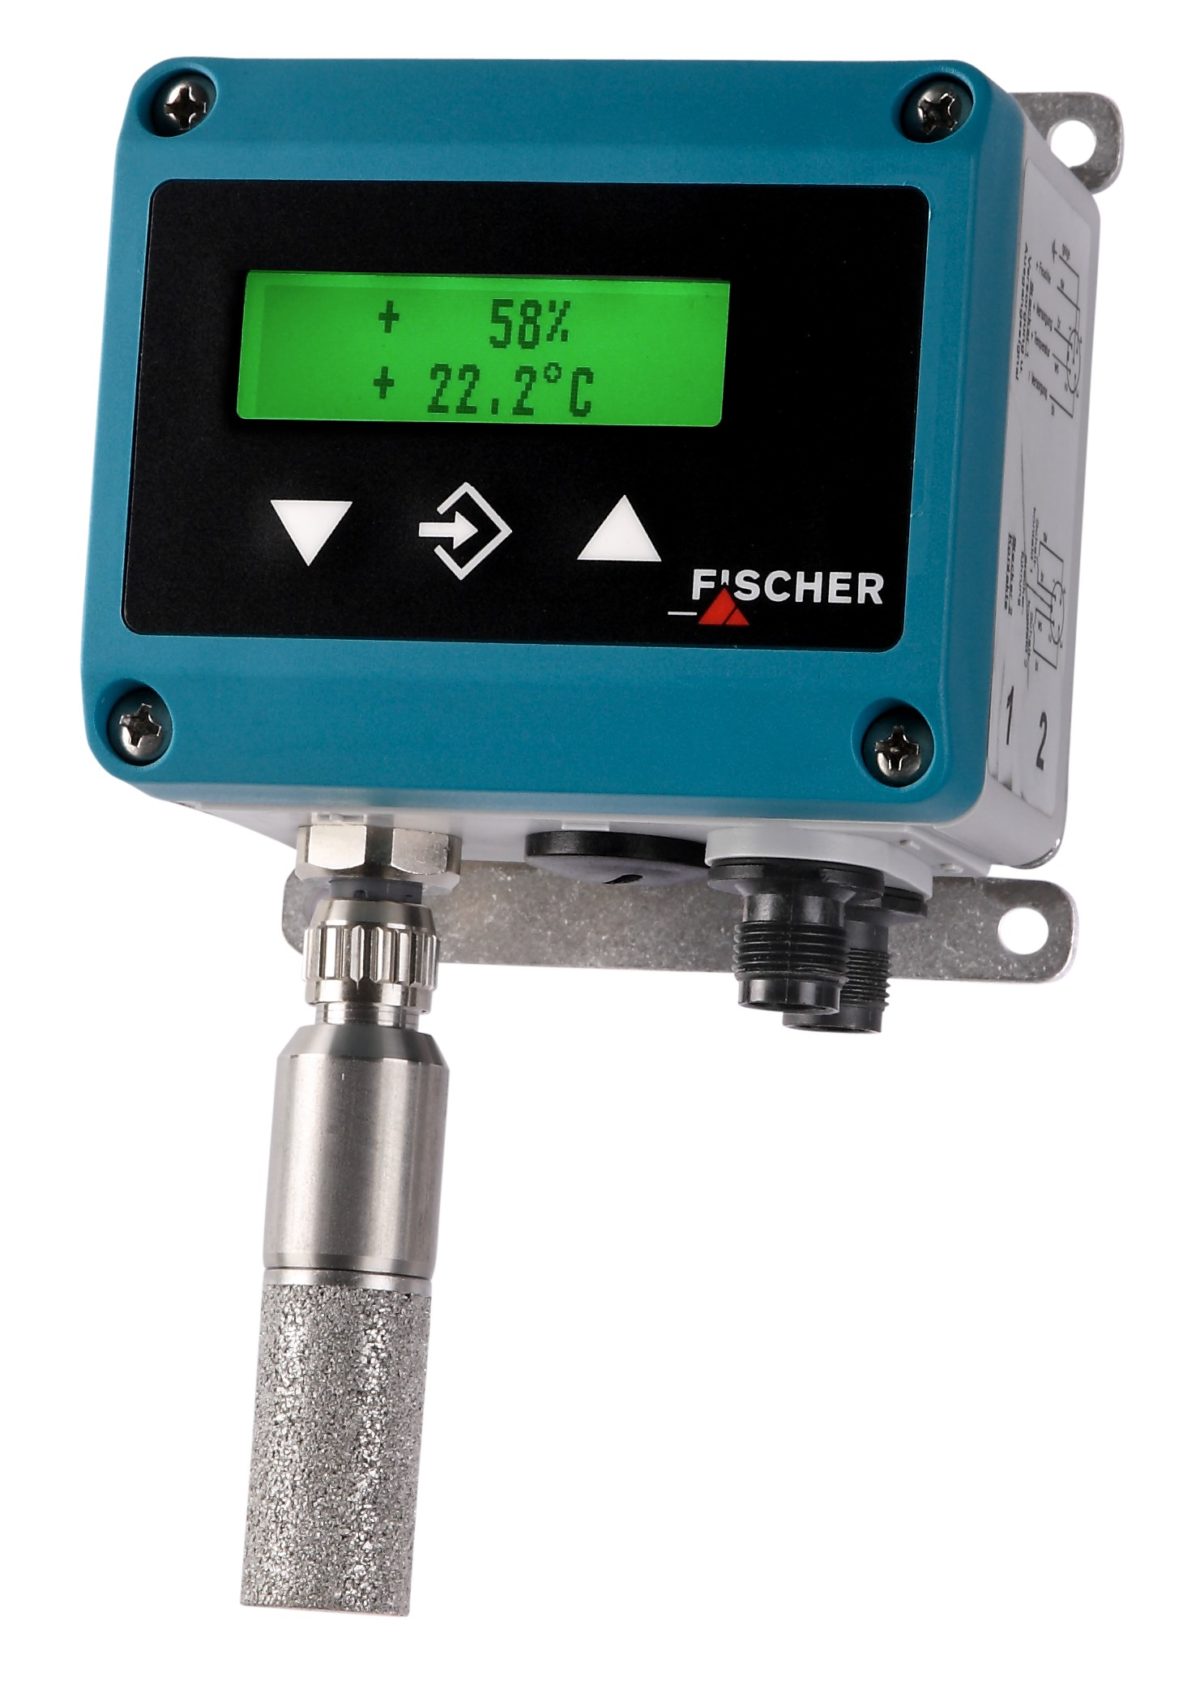 FISCHER – FT61 – Temperature and Humidity Sensor